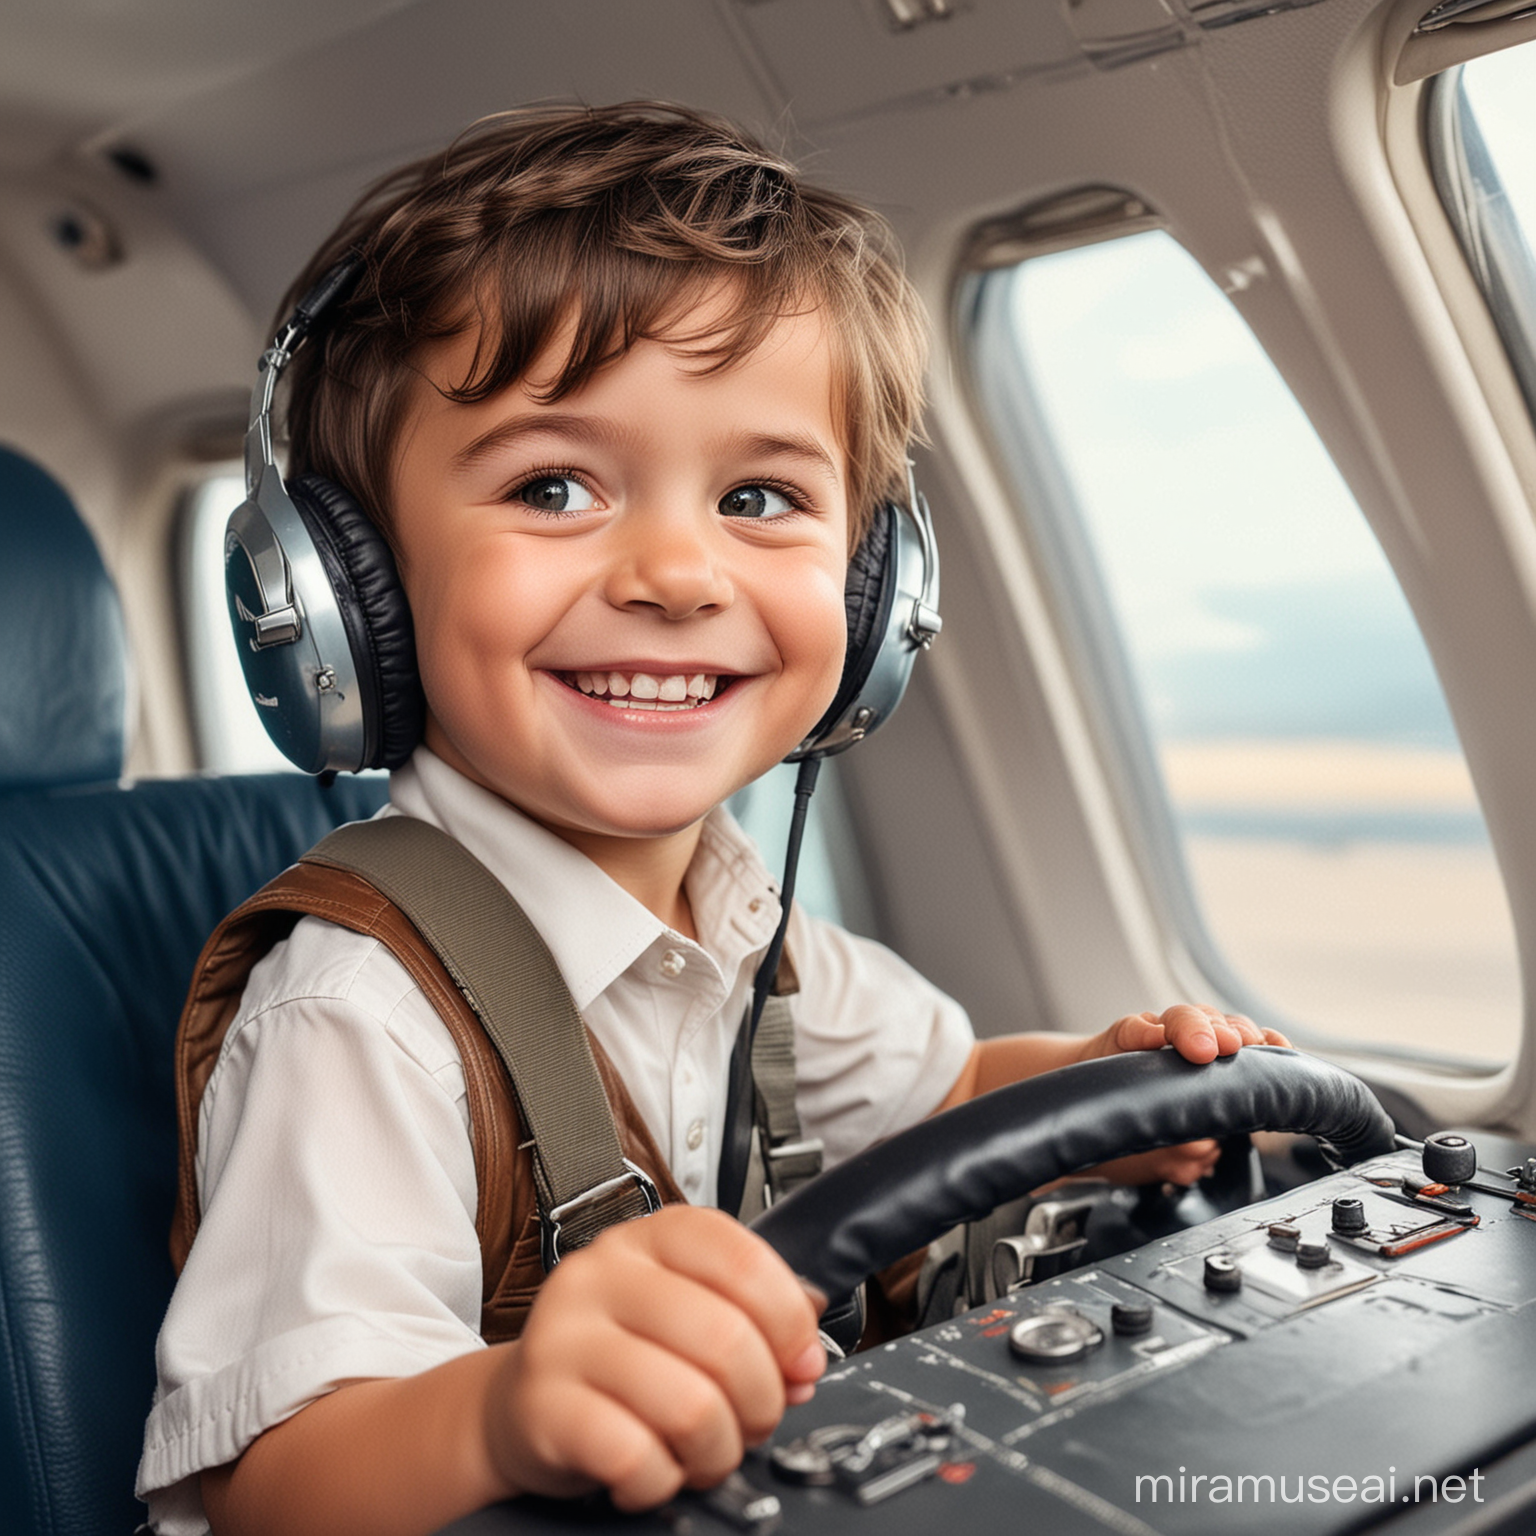 Joyful Child Pretending to Pilot a Plane